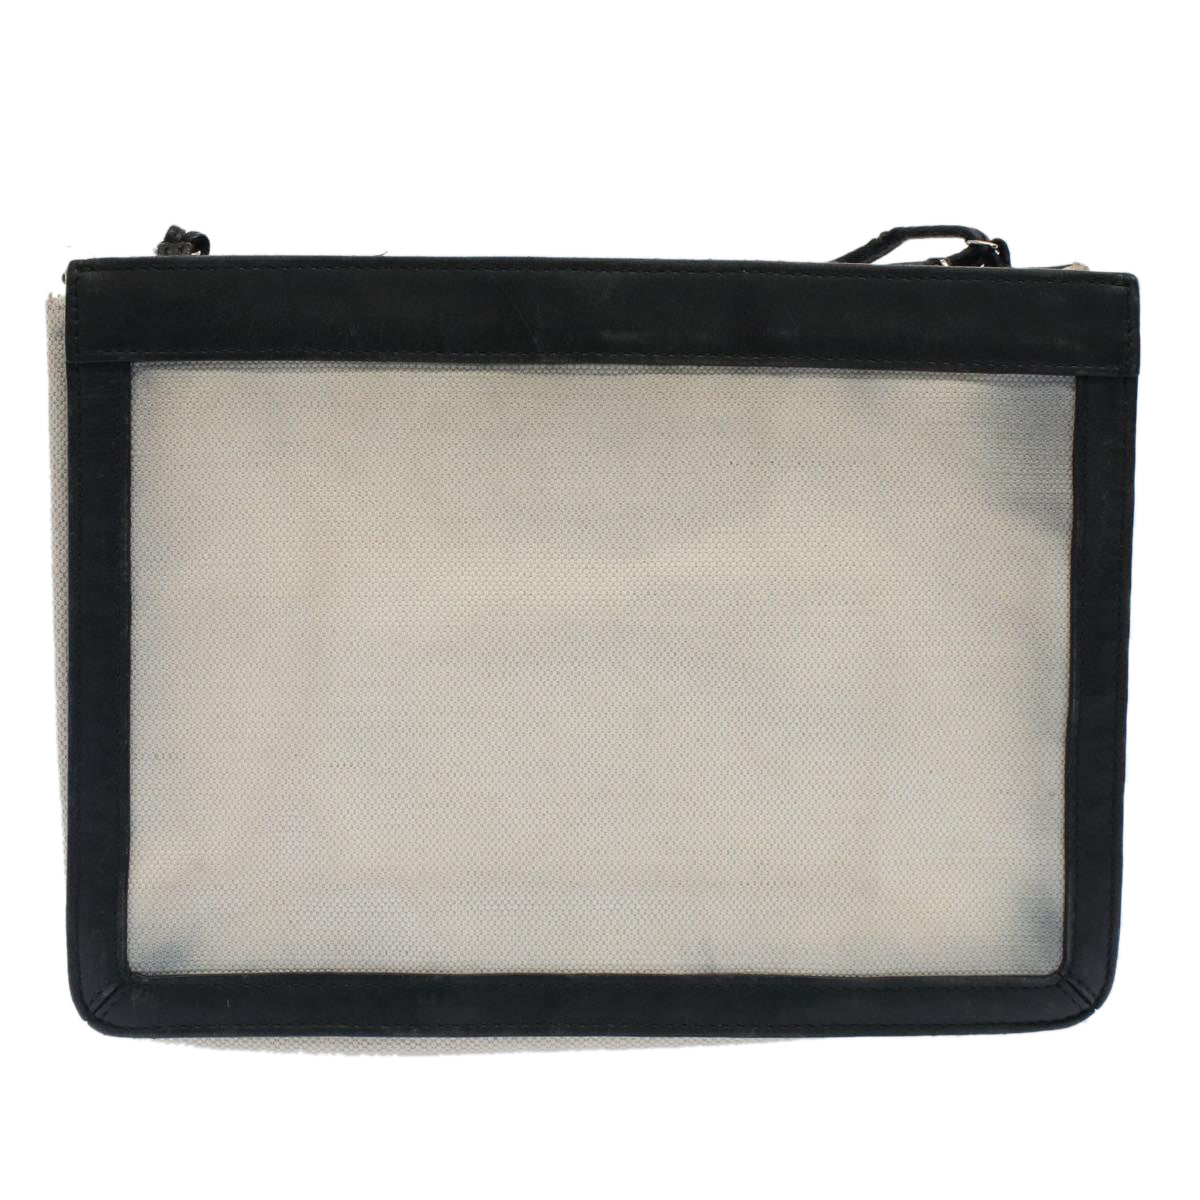 BALENCIAGA Shoulder Bag Canvas White Black Auth bs7585